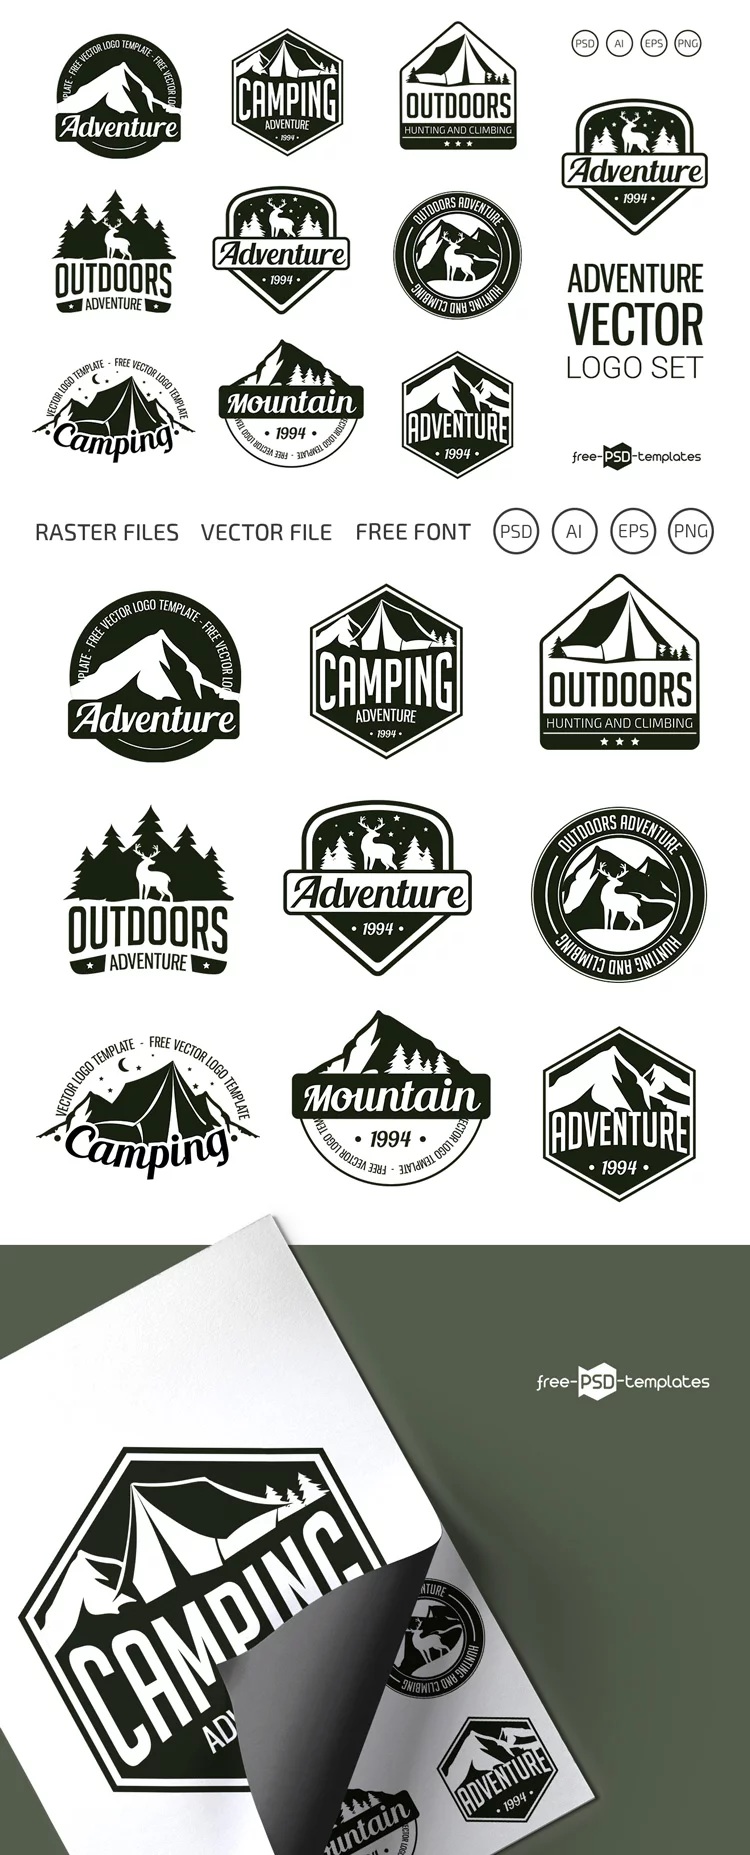 Free Vector Adventure Logo Set Template